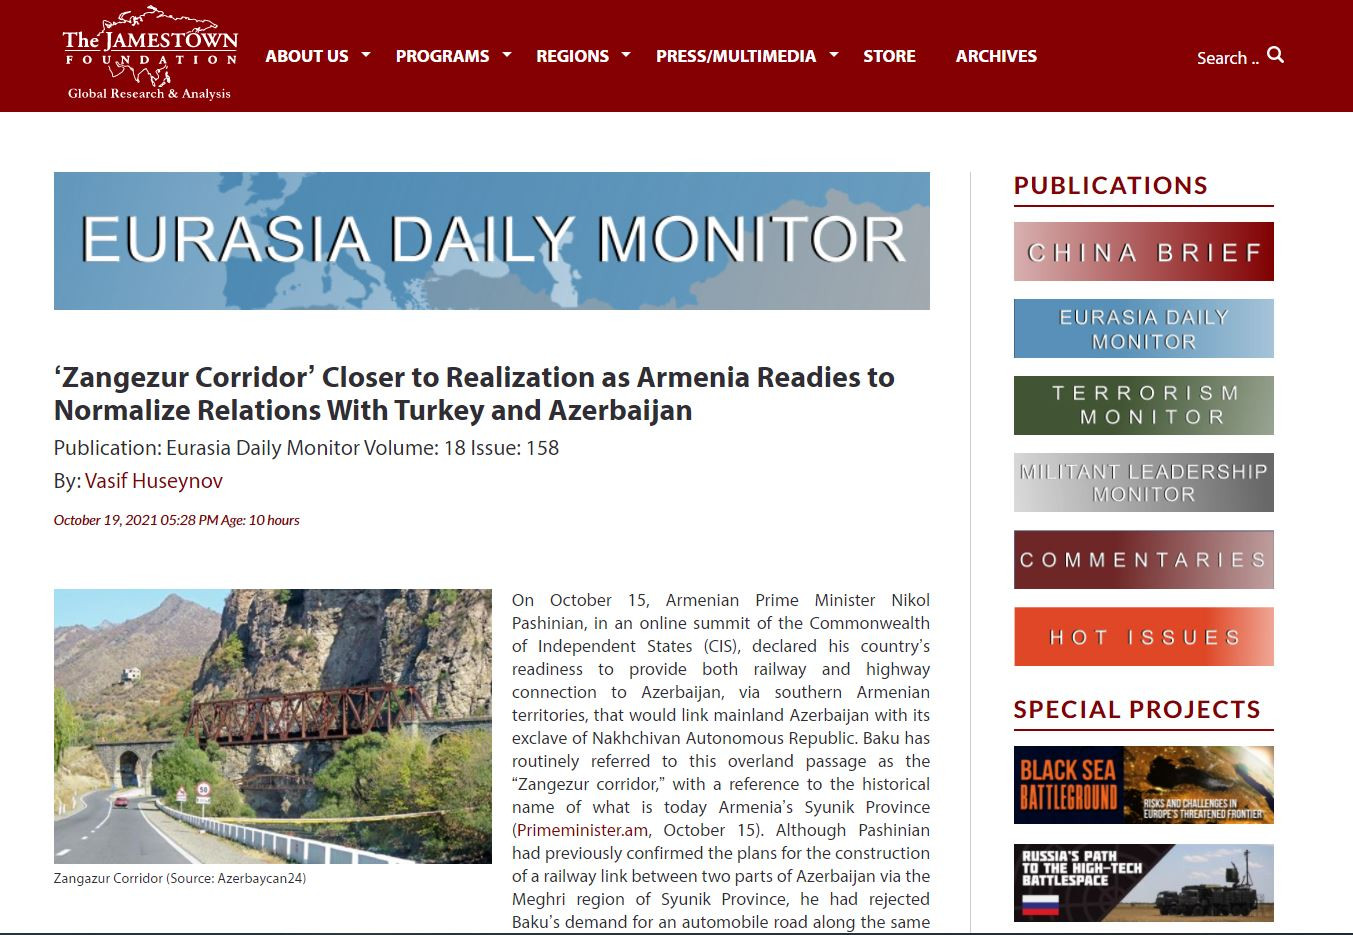 ‘Zangezur Corridor’ Closer to Realization as Armenia Readies to Normalize Relations With Turkey and Azerbaijan